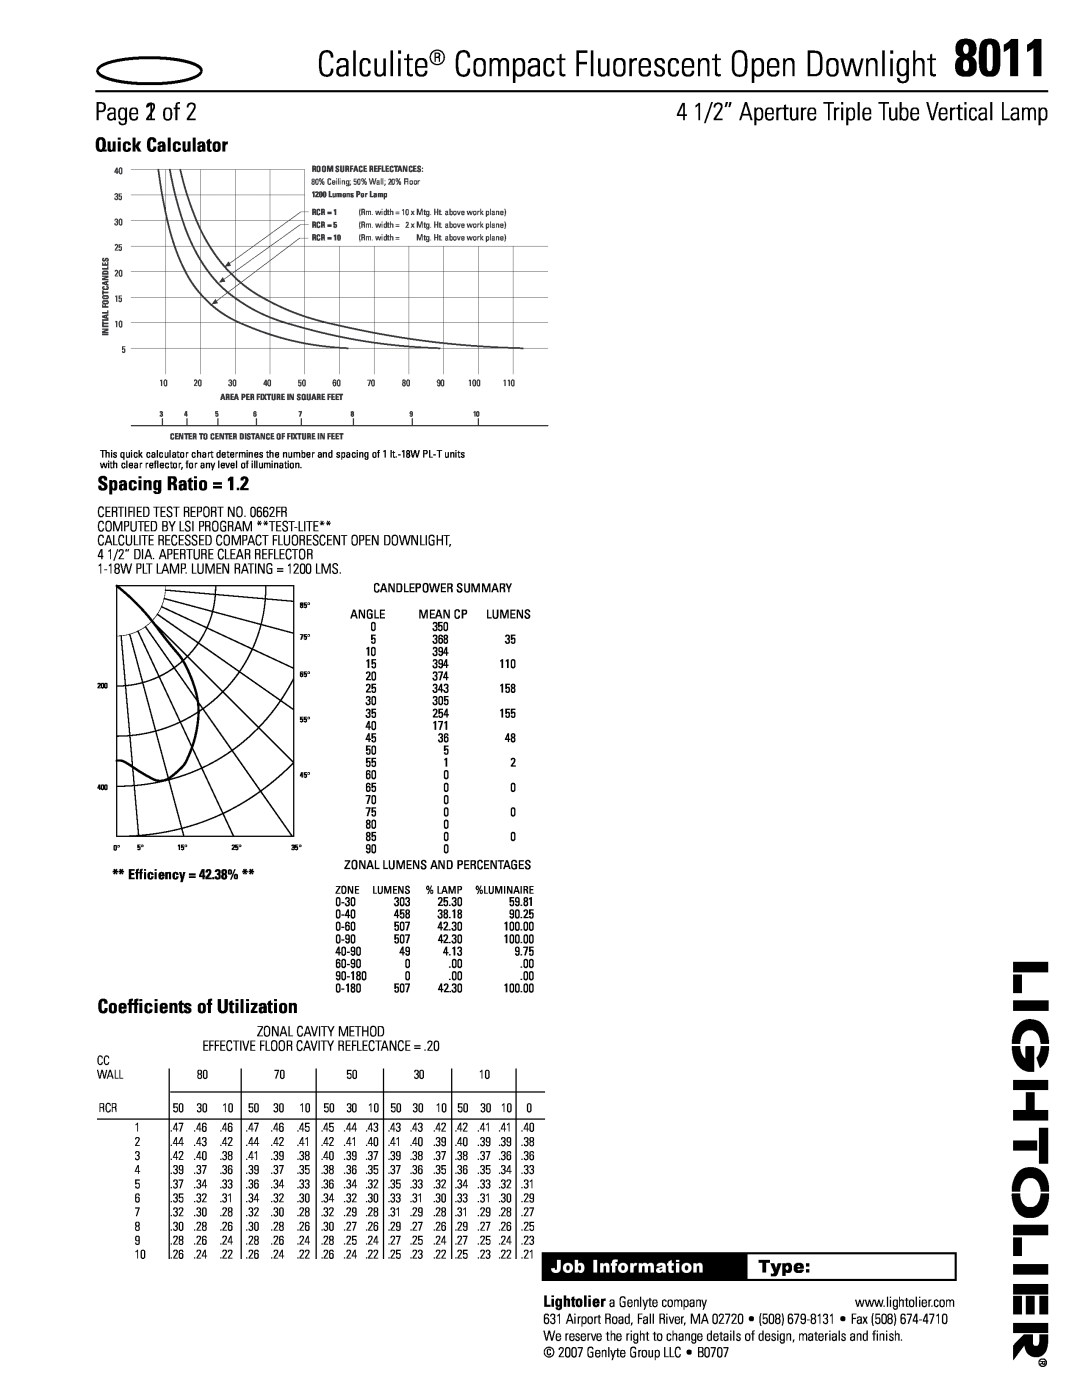 Lightolier 8011 Page 21 of, Quick Calculator, Spacing Ratio =, Calculite Compact Fluorescent Open Downlight, Type 